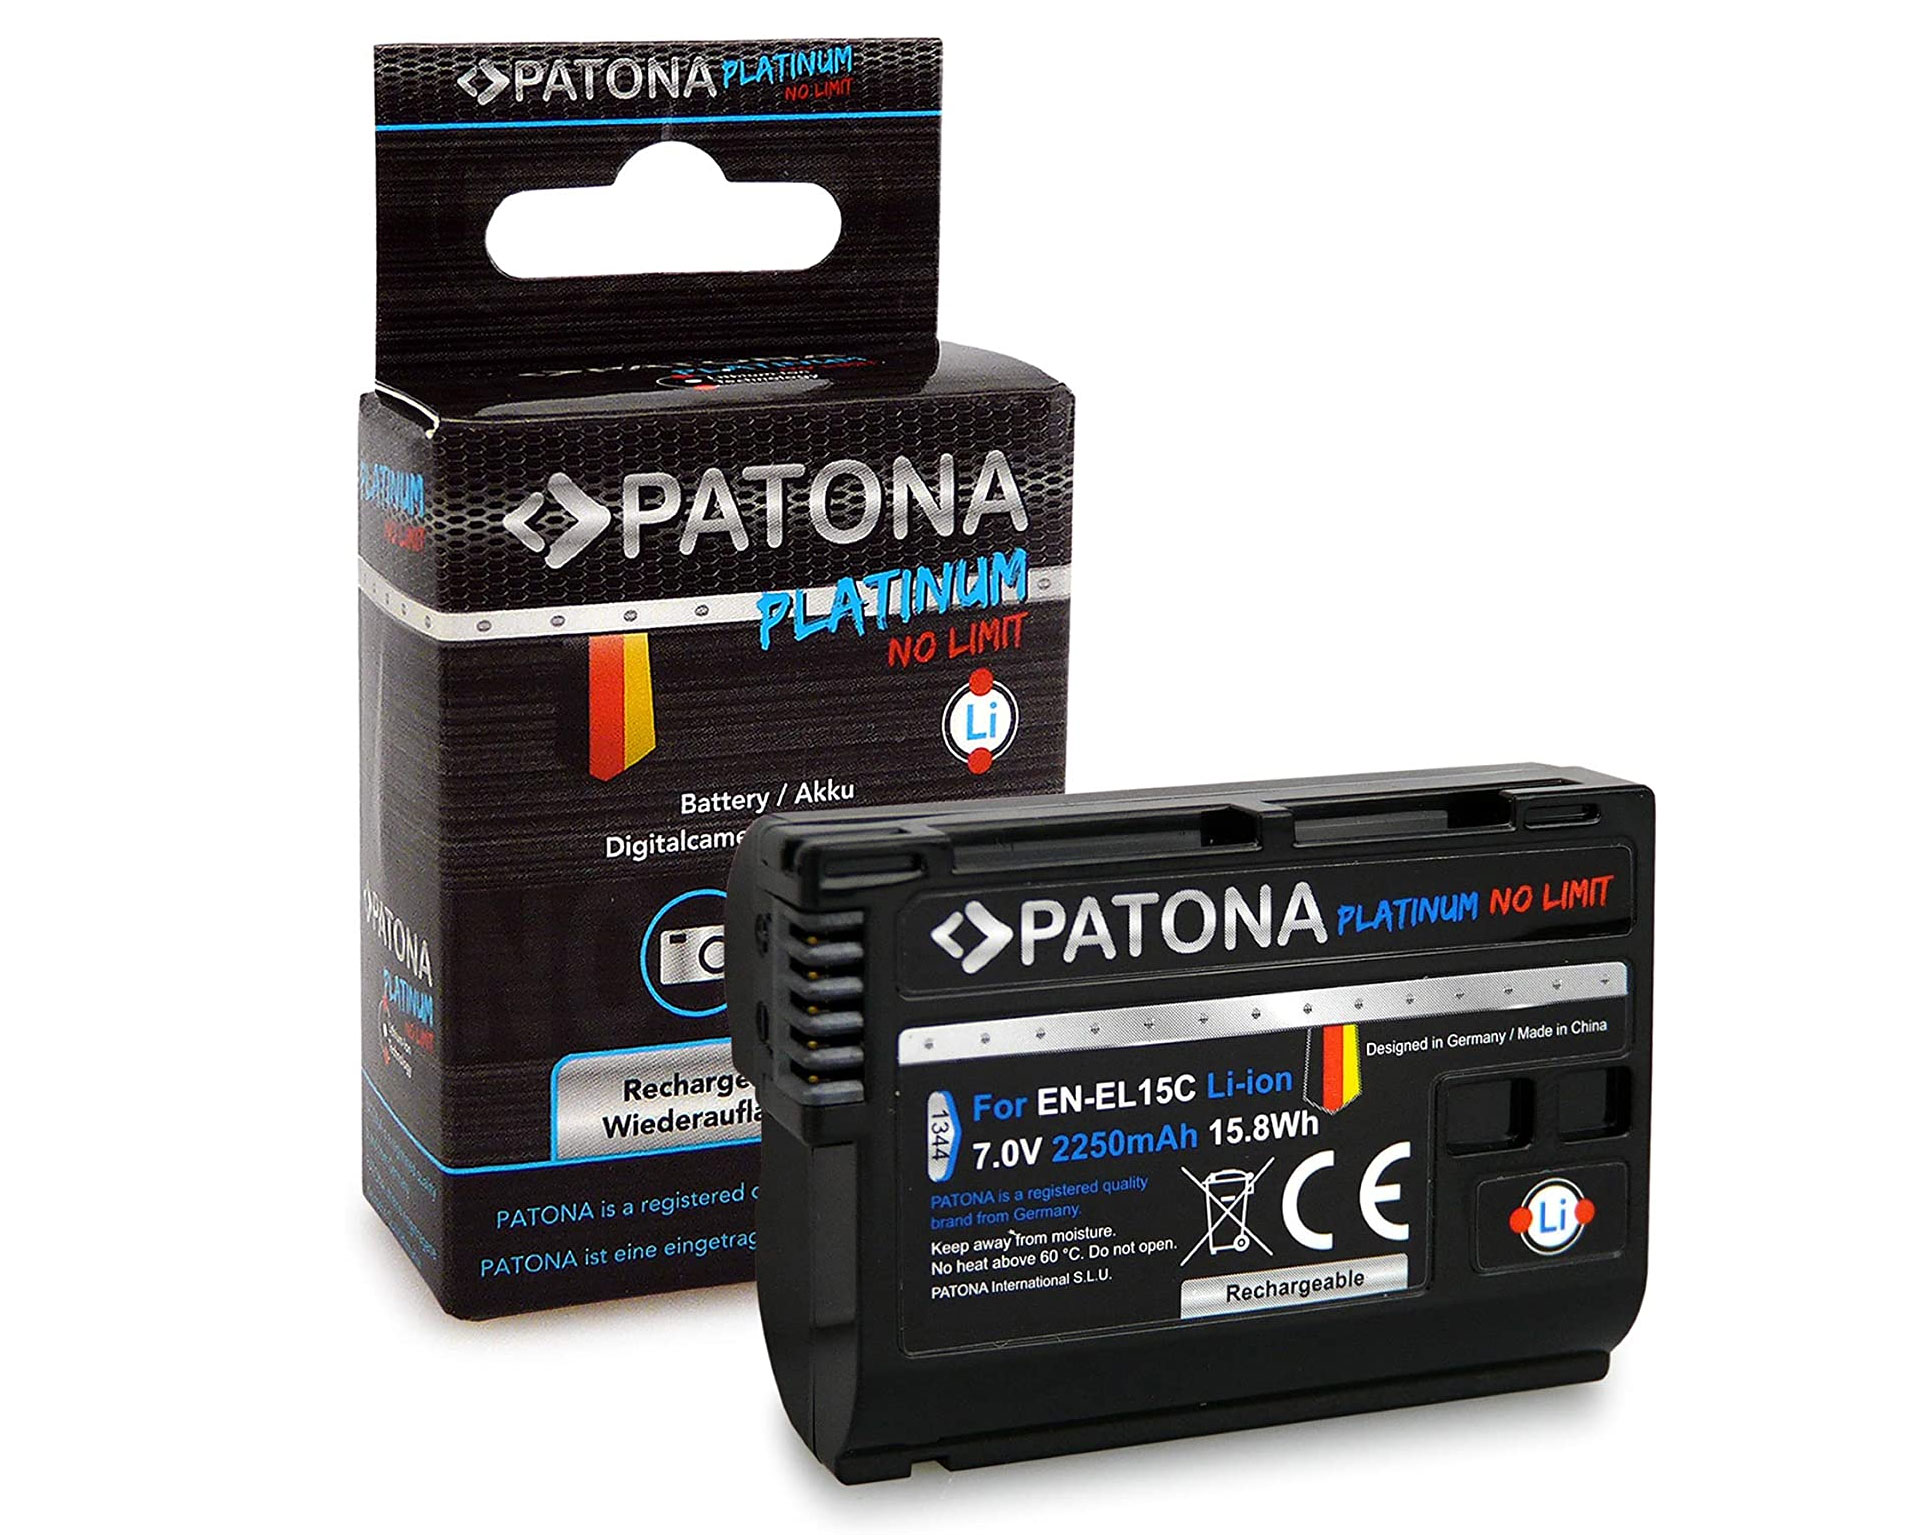 Patona Platinum EN-EL15c Nikon